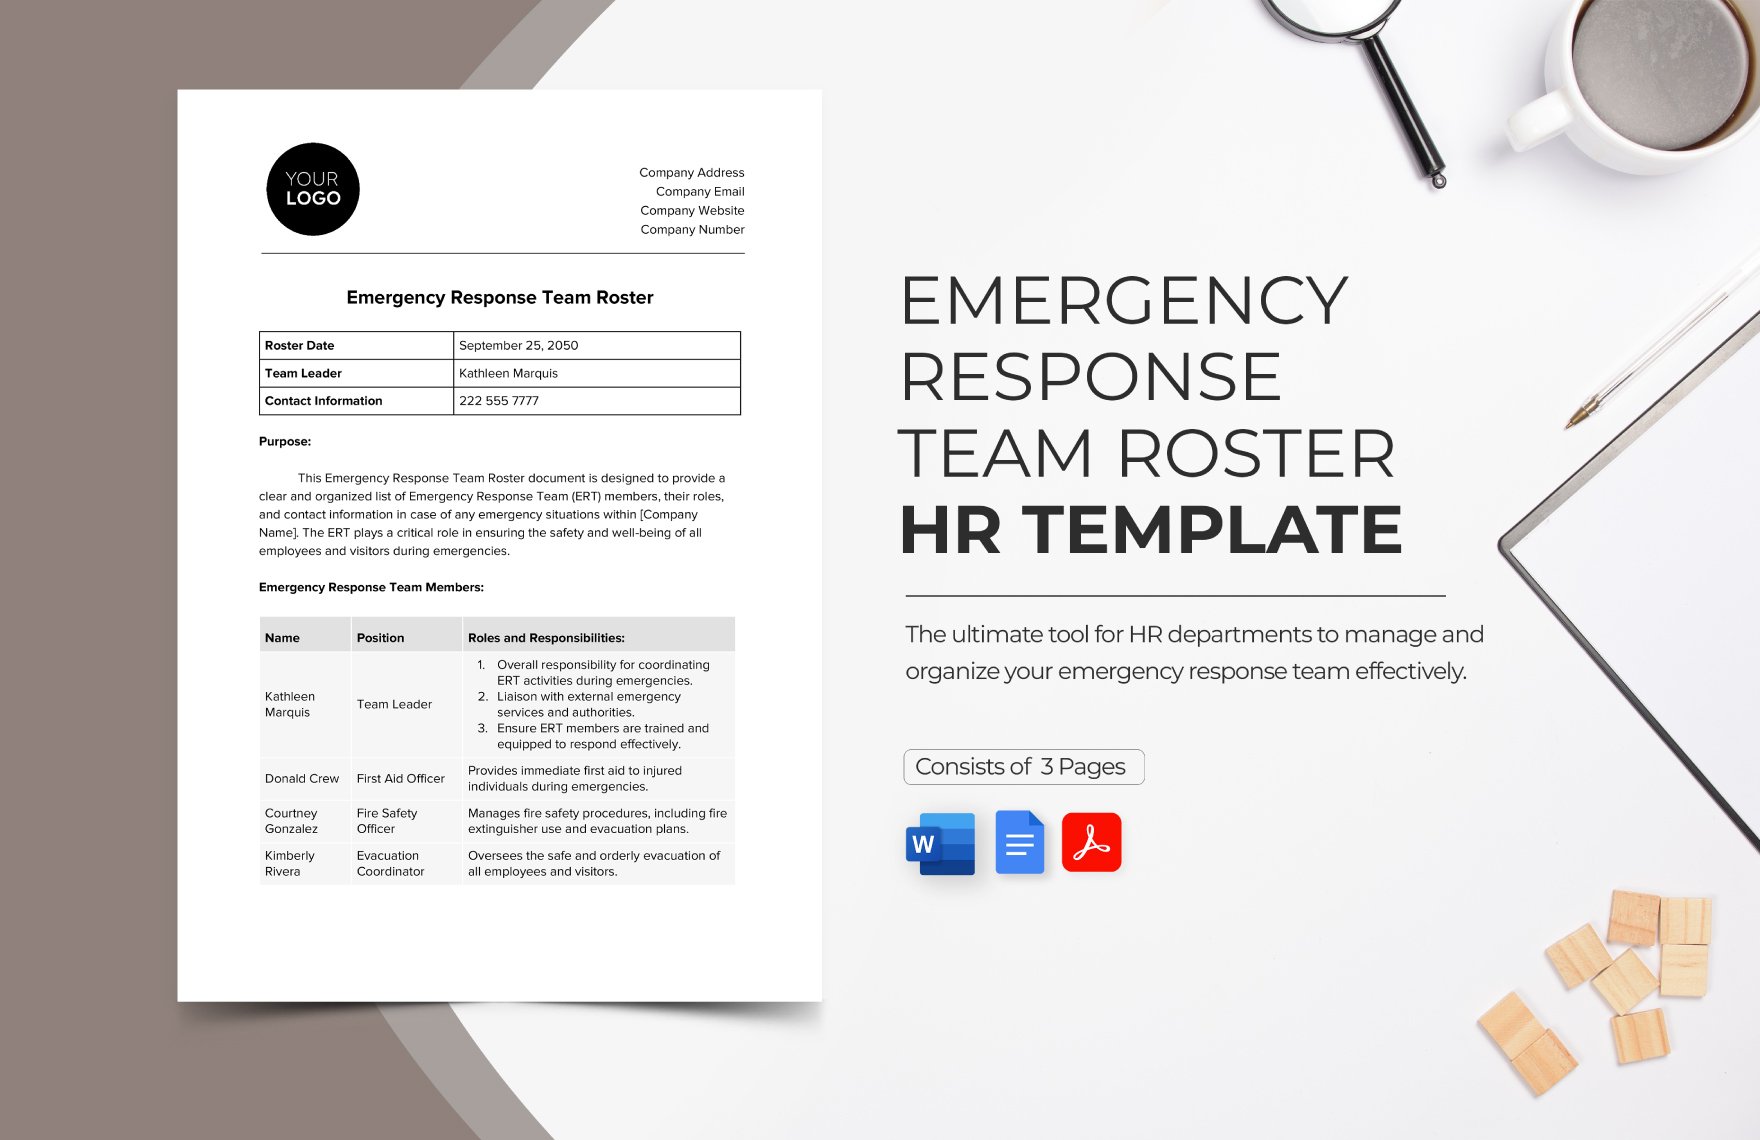 Emergency Response Team Roster HR Template in Word, Google Docs, PDF